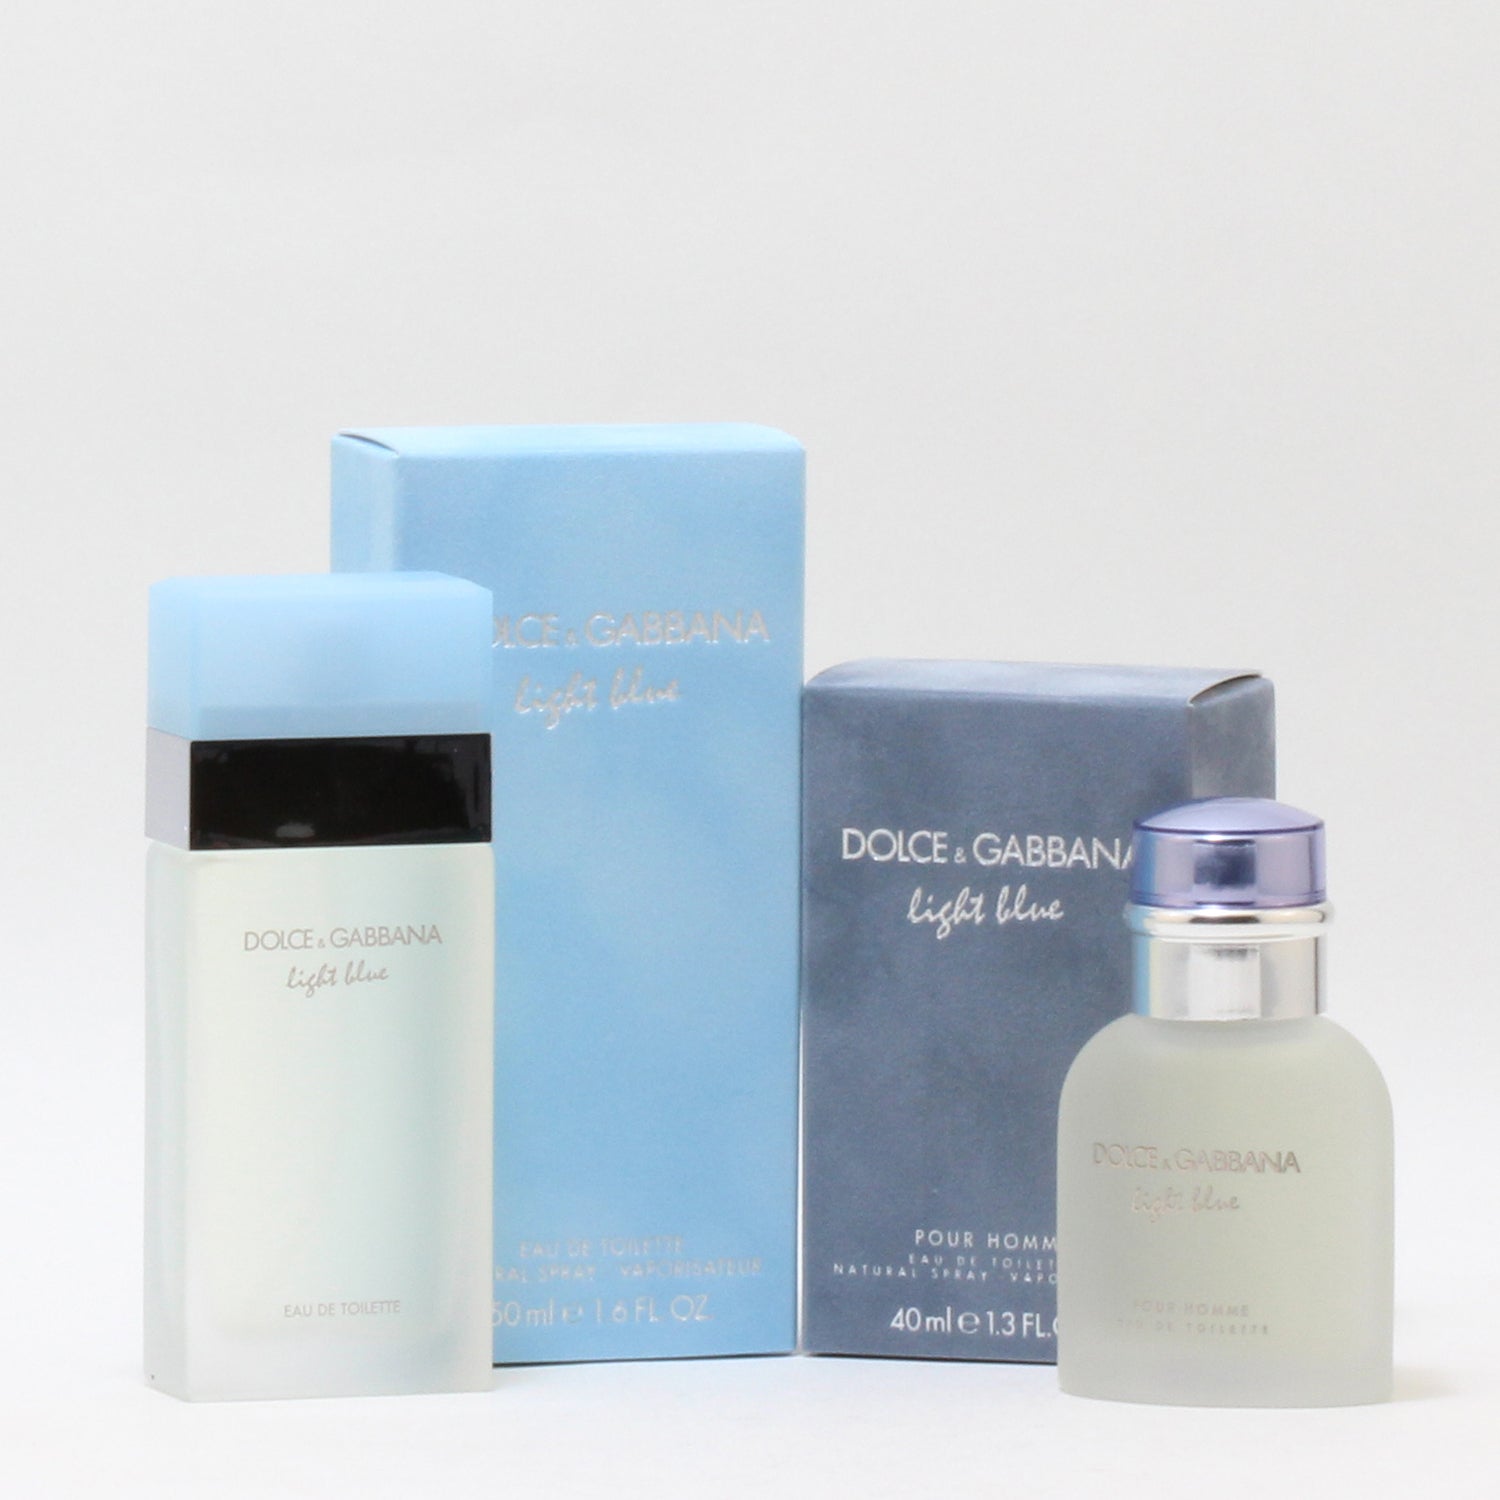 Light Blue by Dolce & Gabbana for Women 0.8 oz Eau de Toilette Spray 